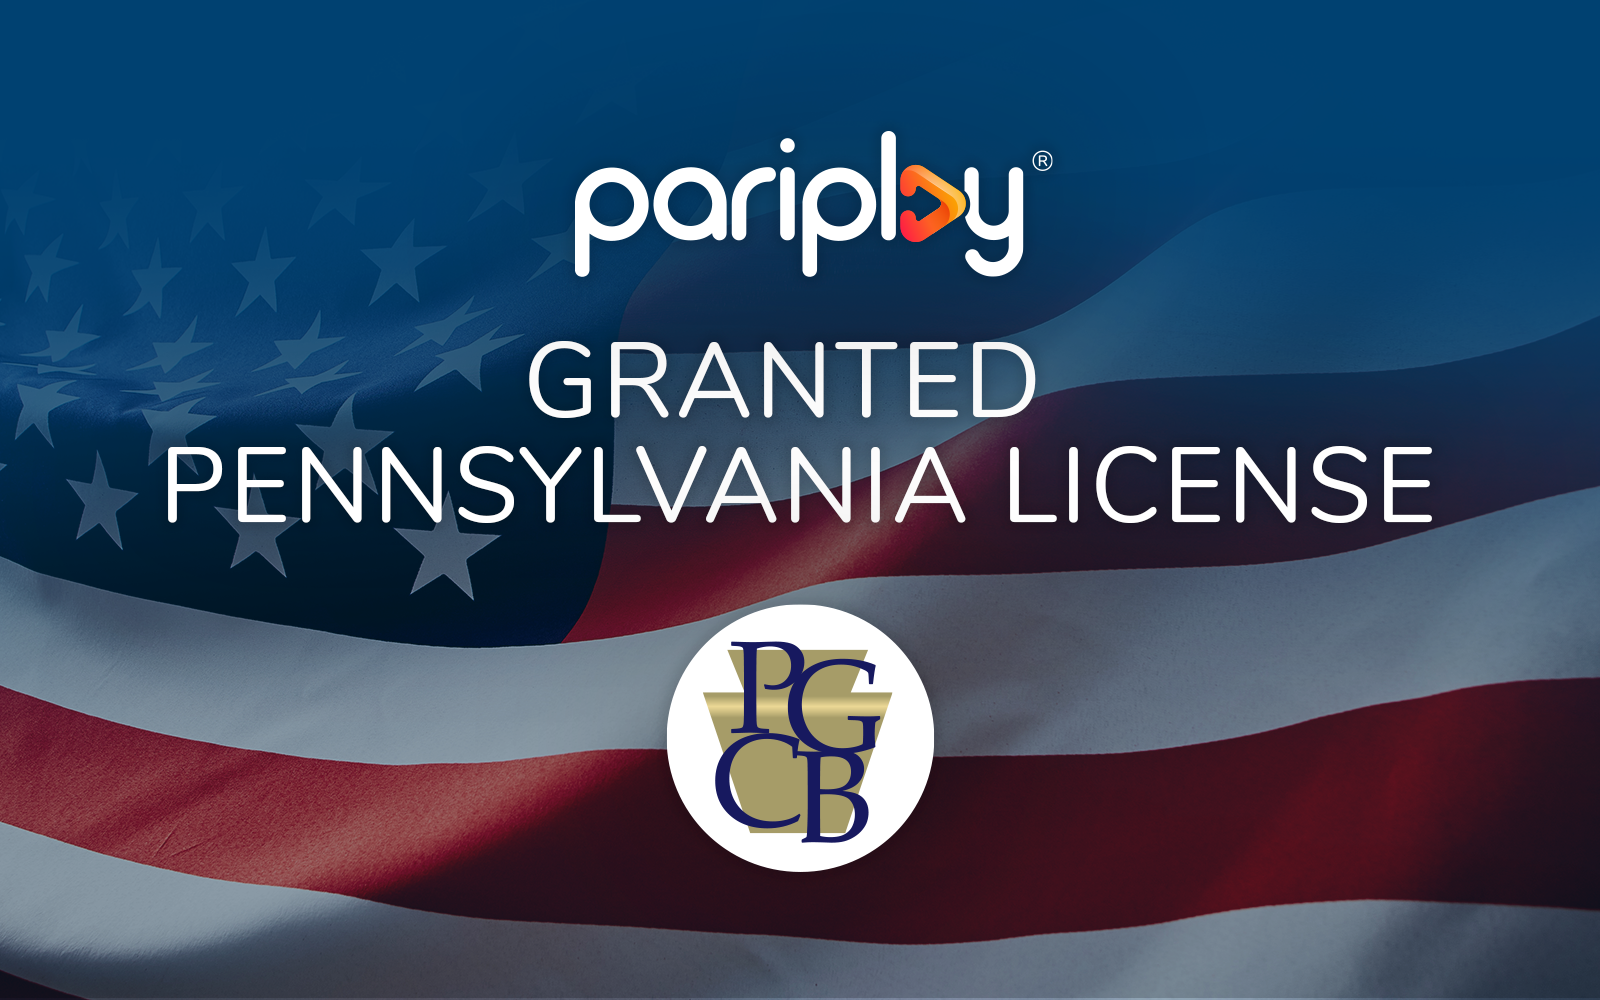 Pariplay granted Pennsylvania license